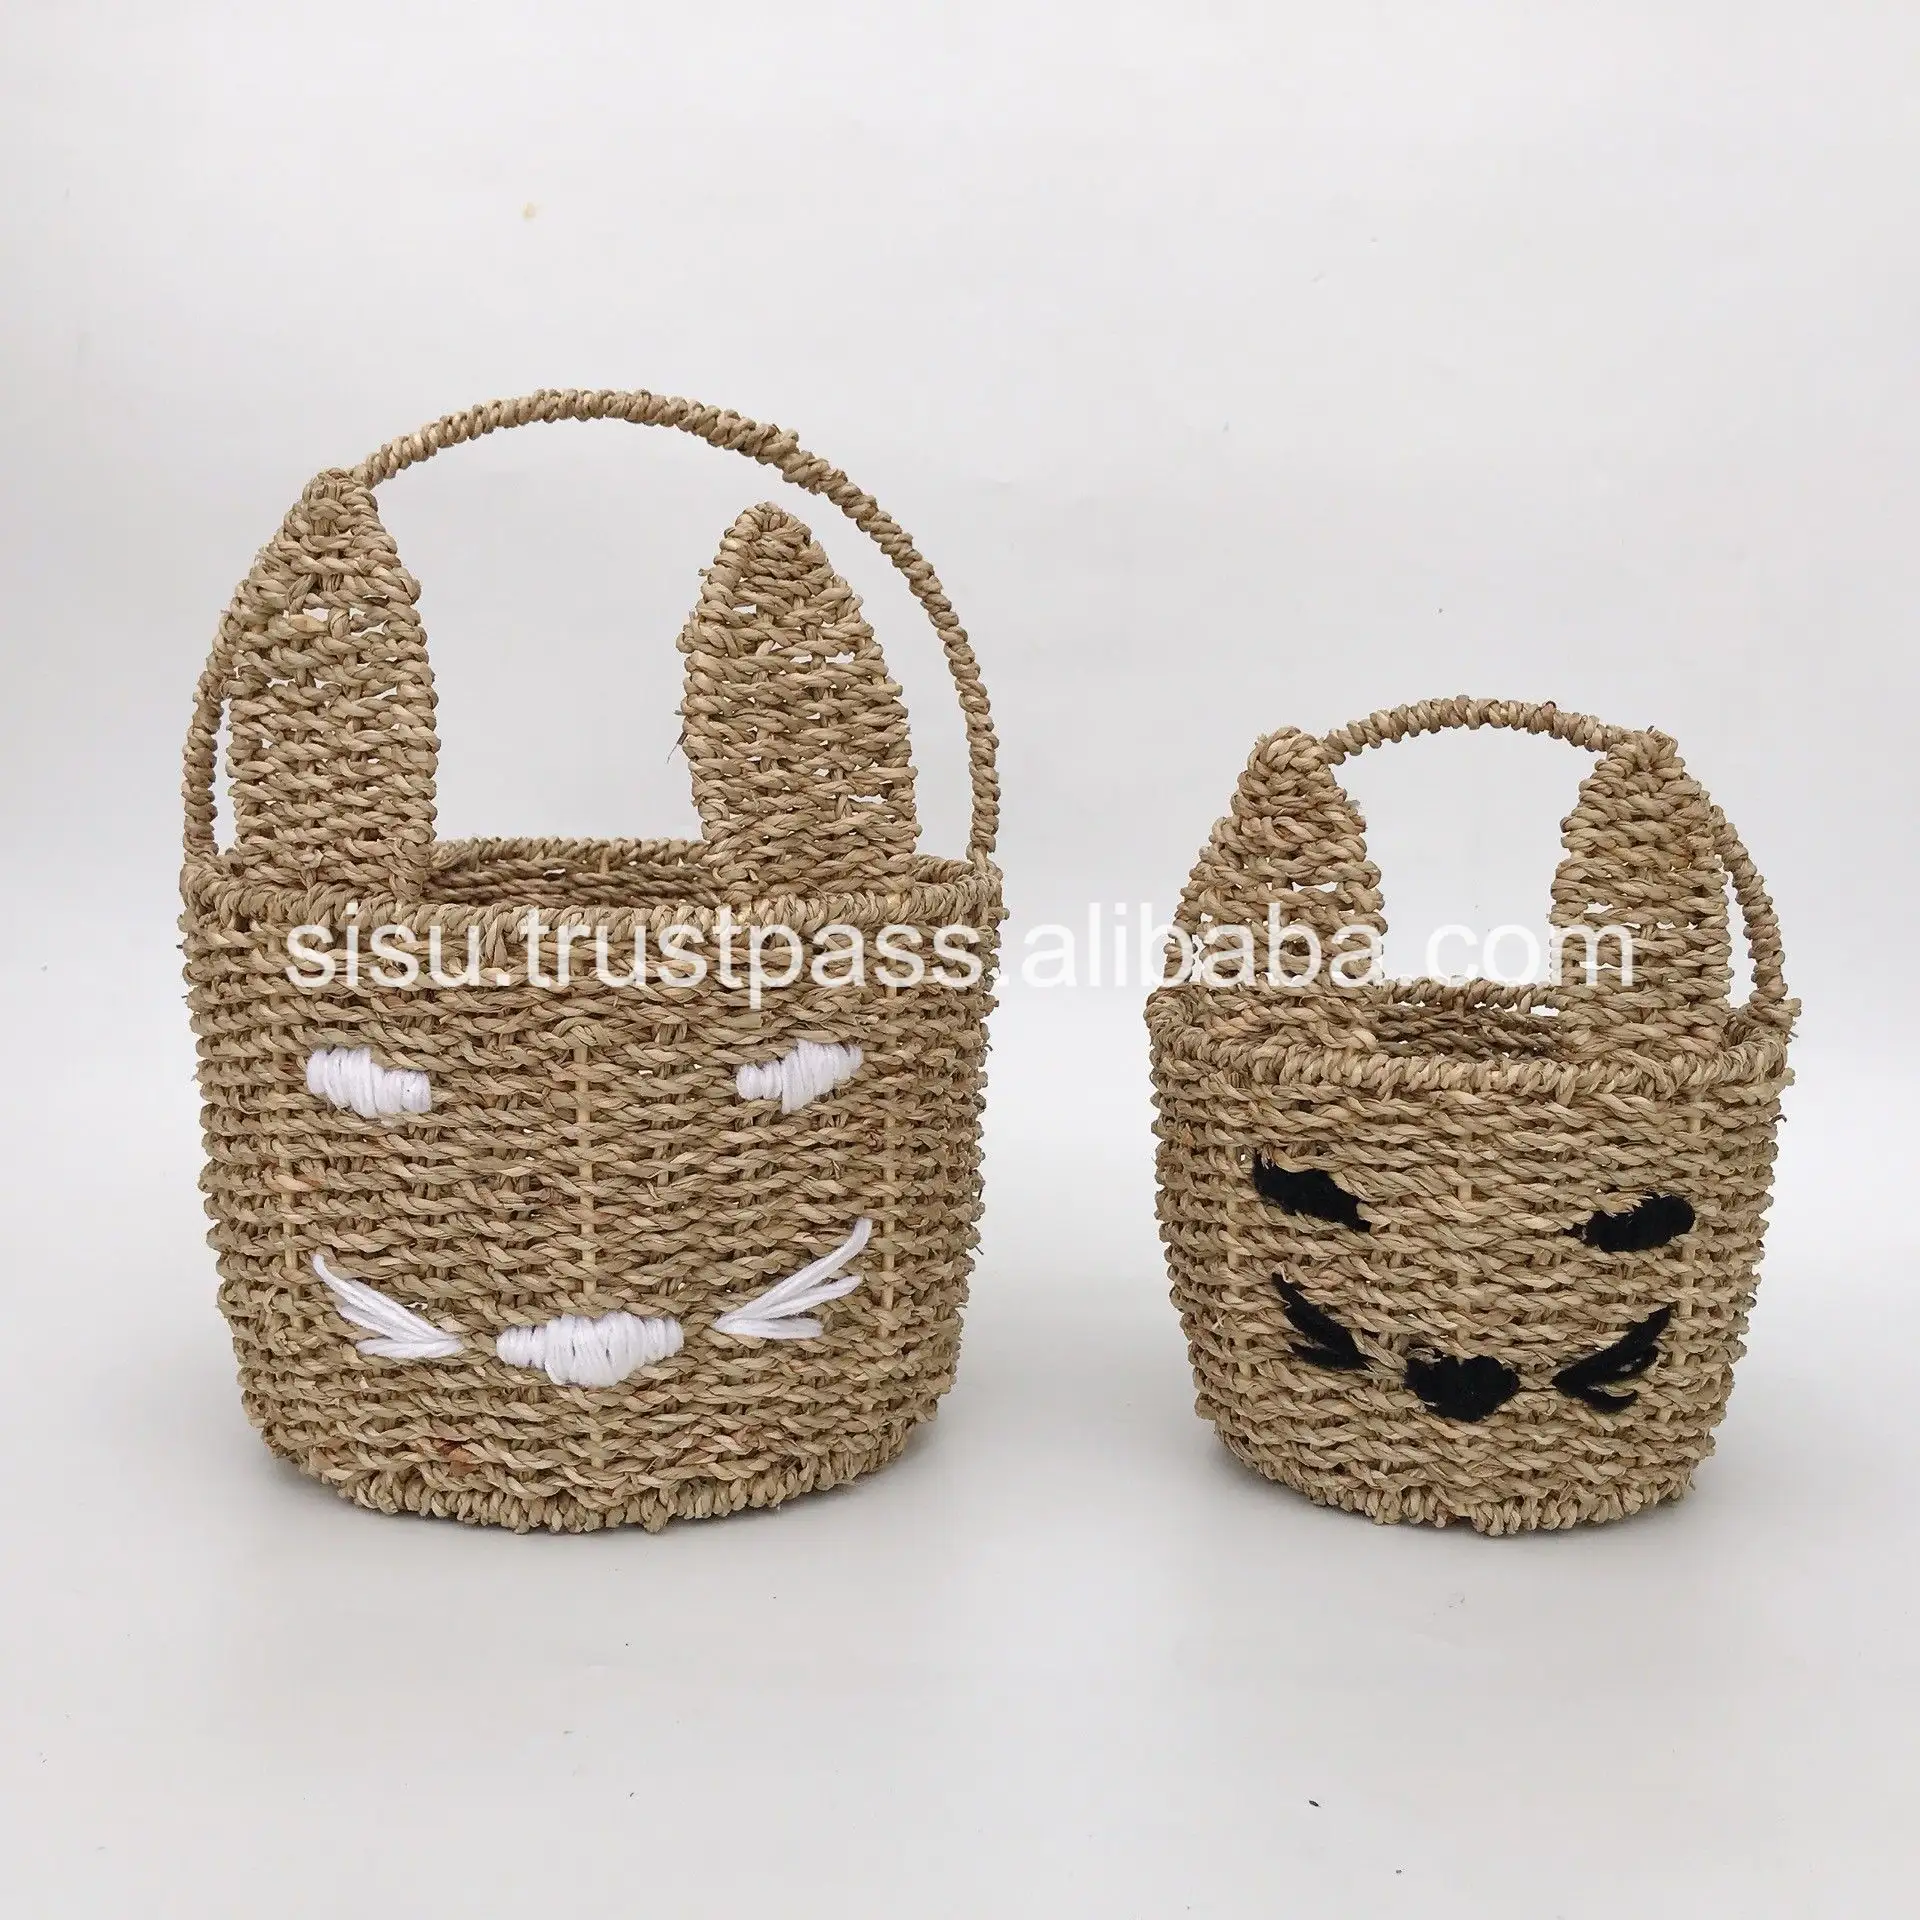 Handwoven Seagrass Gift Basket Rabbit Ears Easter Flower Basket for Holiday Decorative Storage Baskets